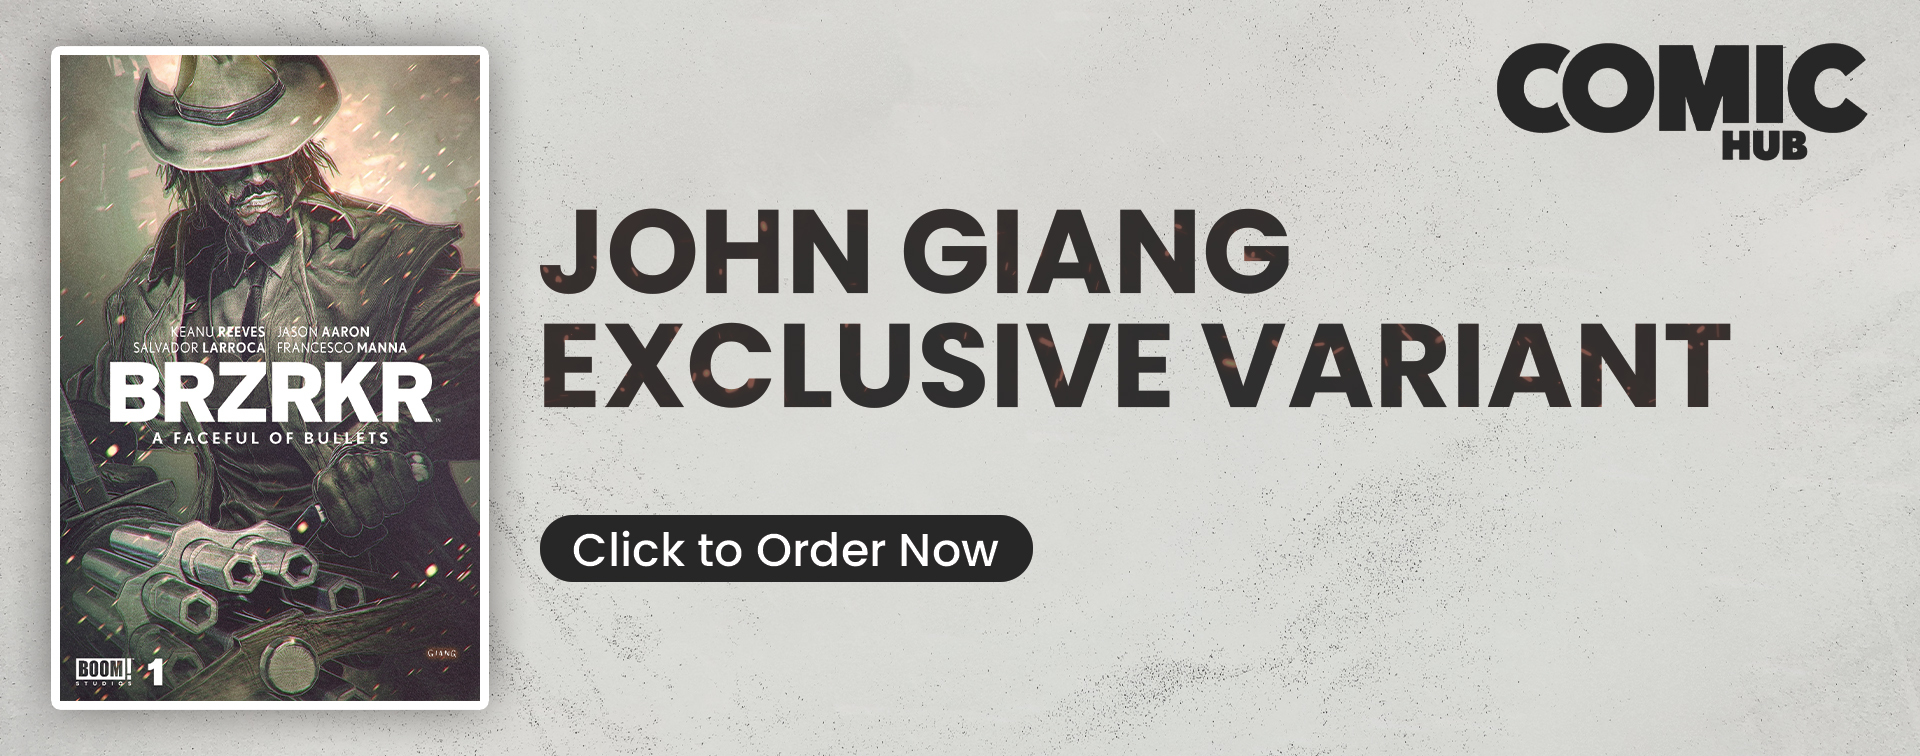 John Giang Exclusive Variant